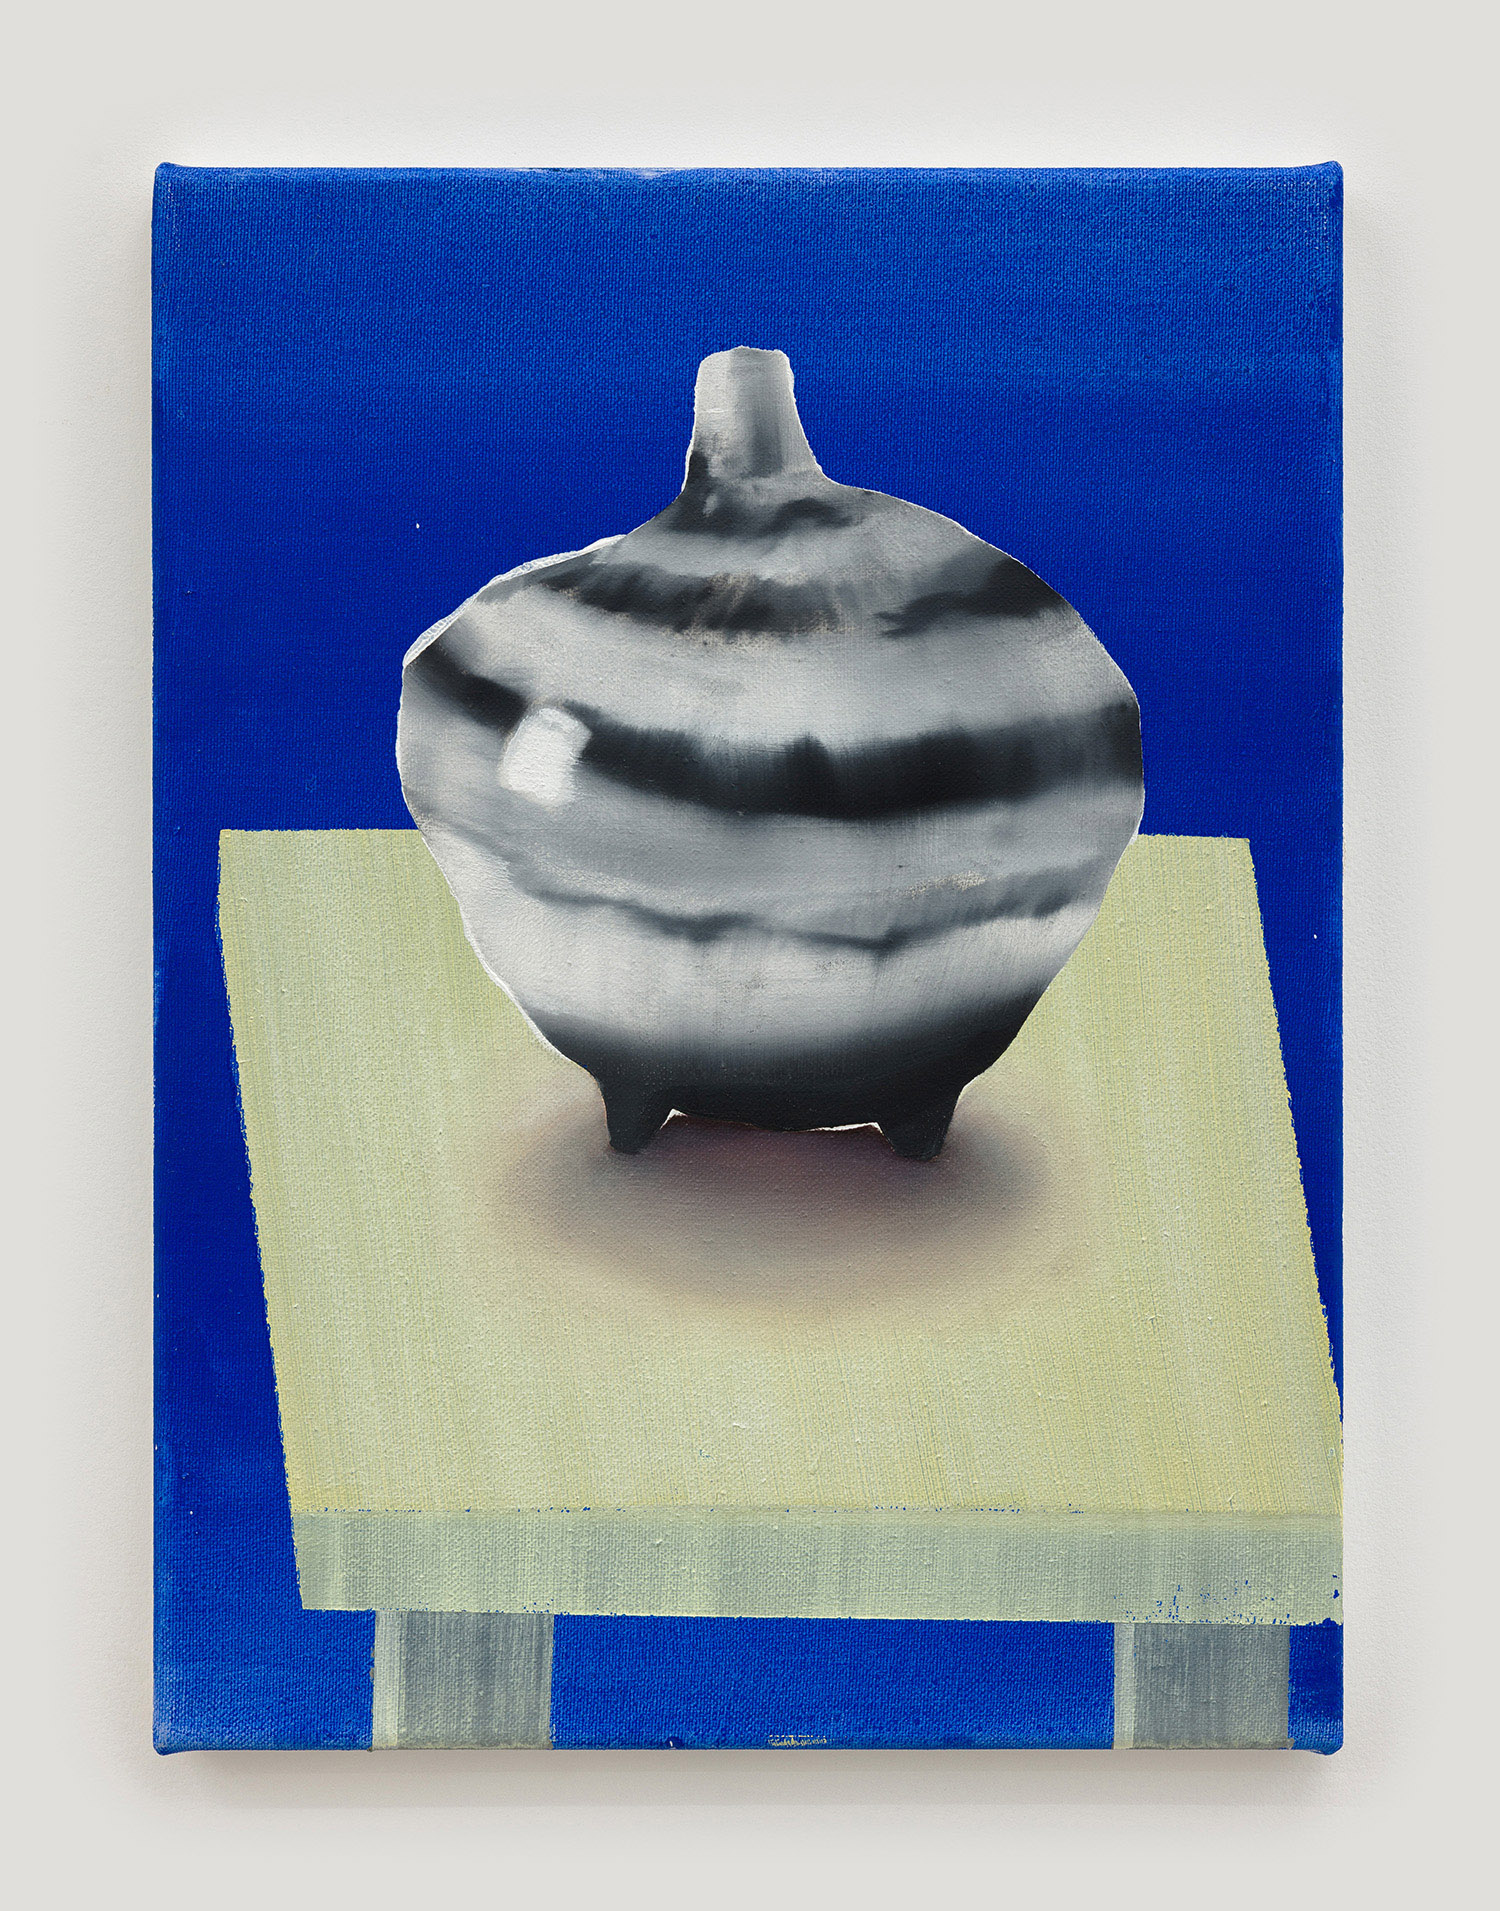 Ellen Akimoto, Black and White Vase, 2021, acrylic on canvas, 40 x 30 cm, 15 3/4 x 11 3/4 in